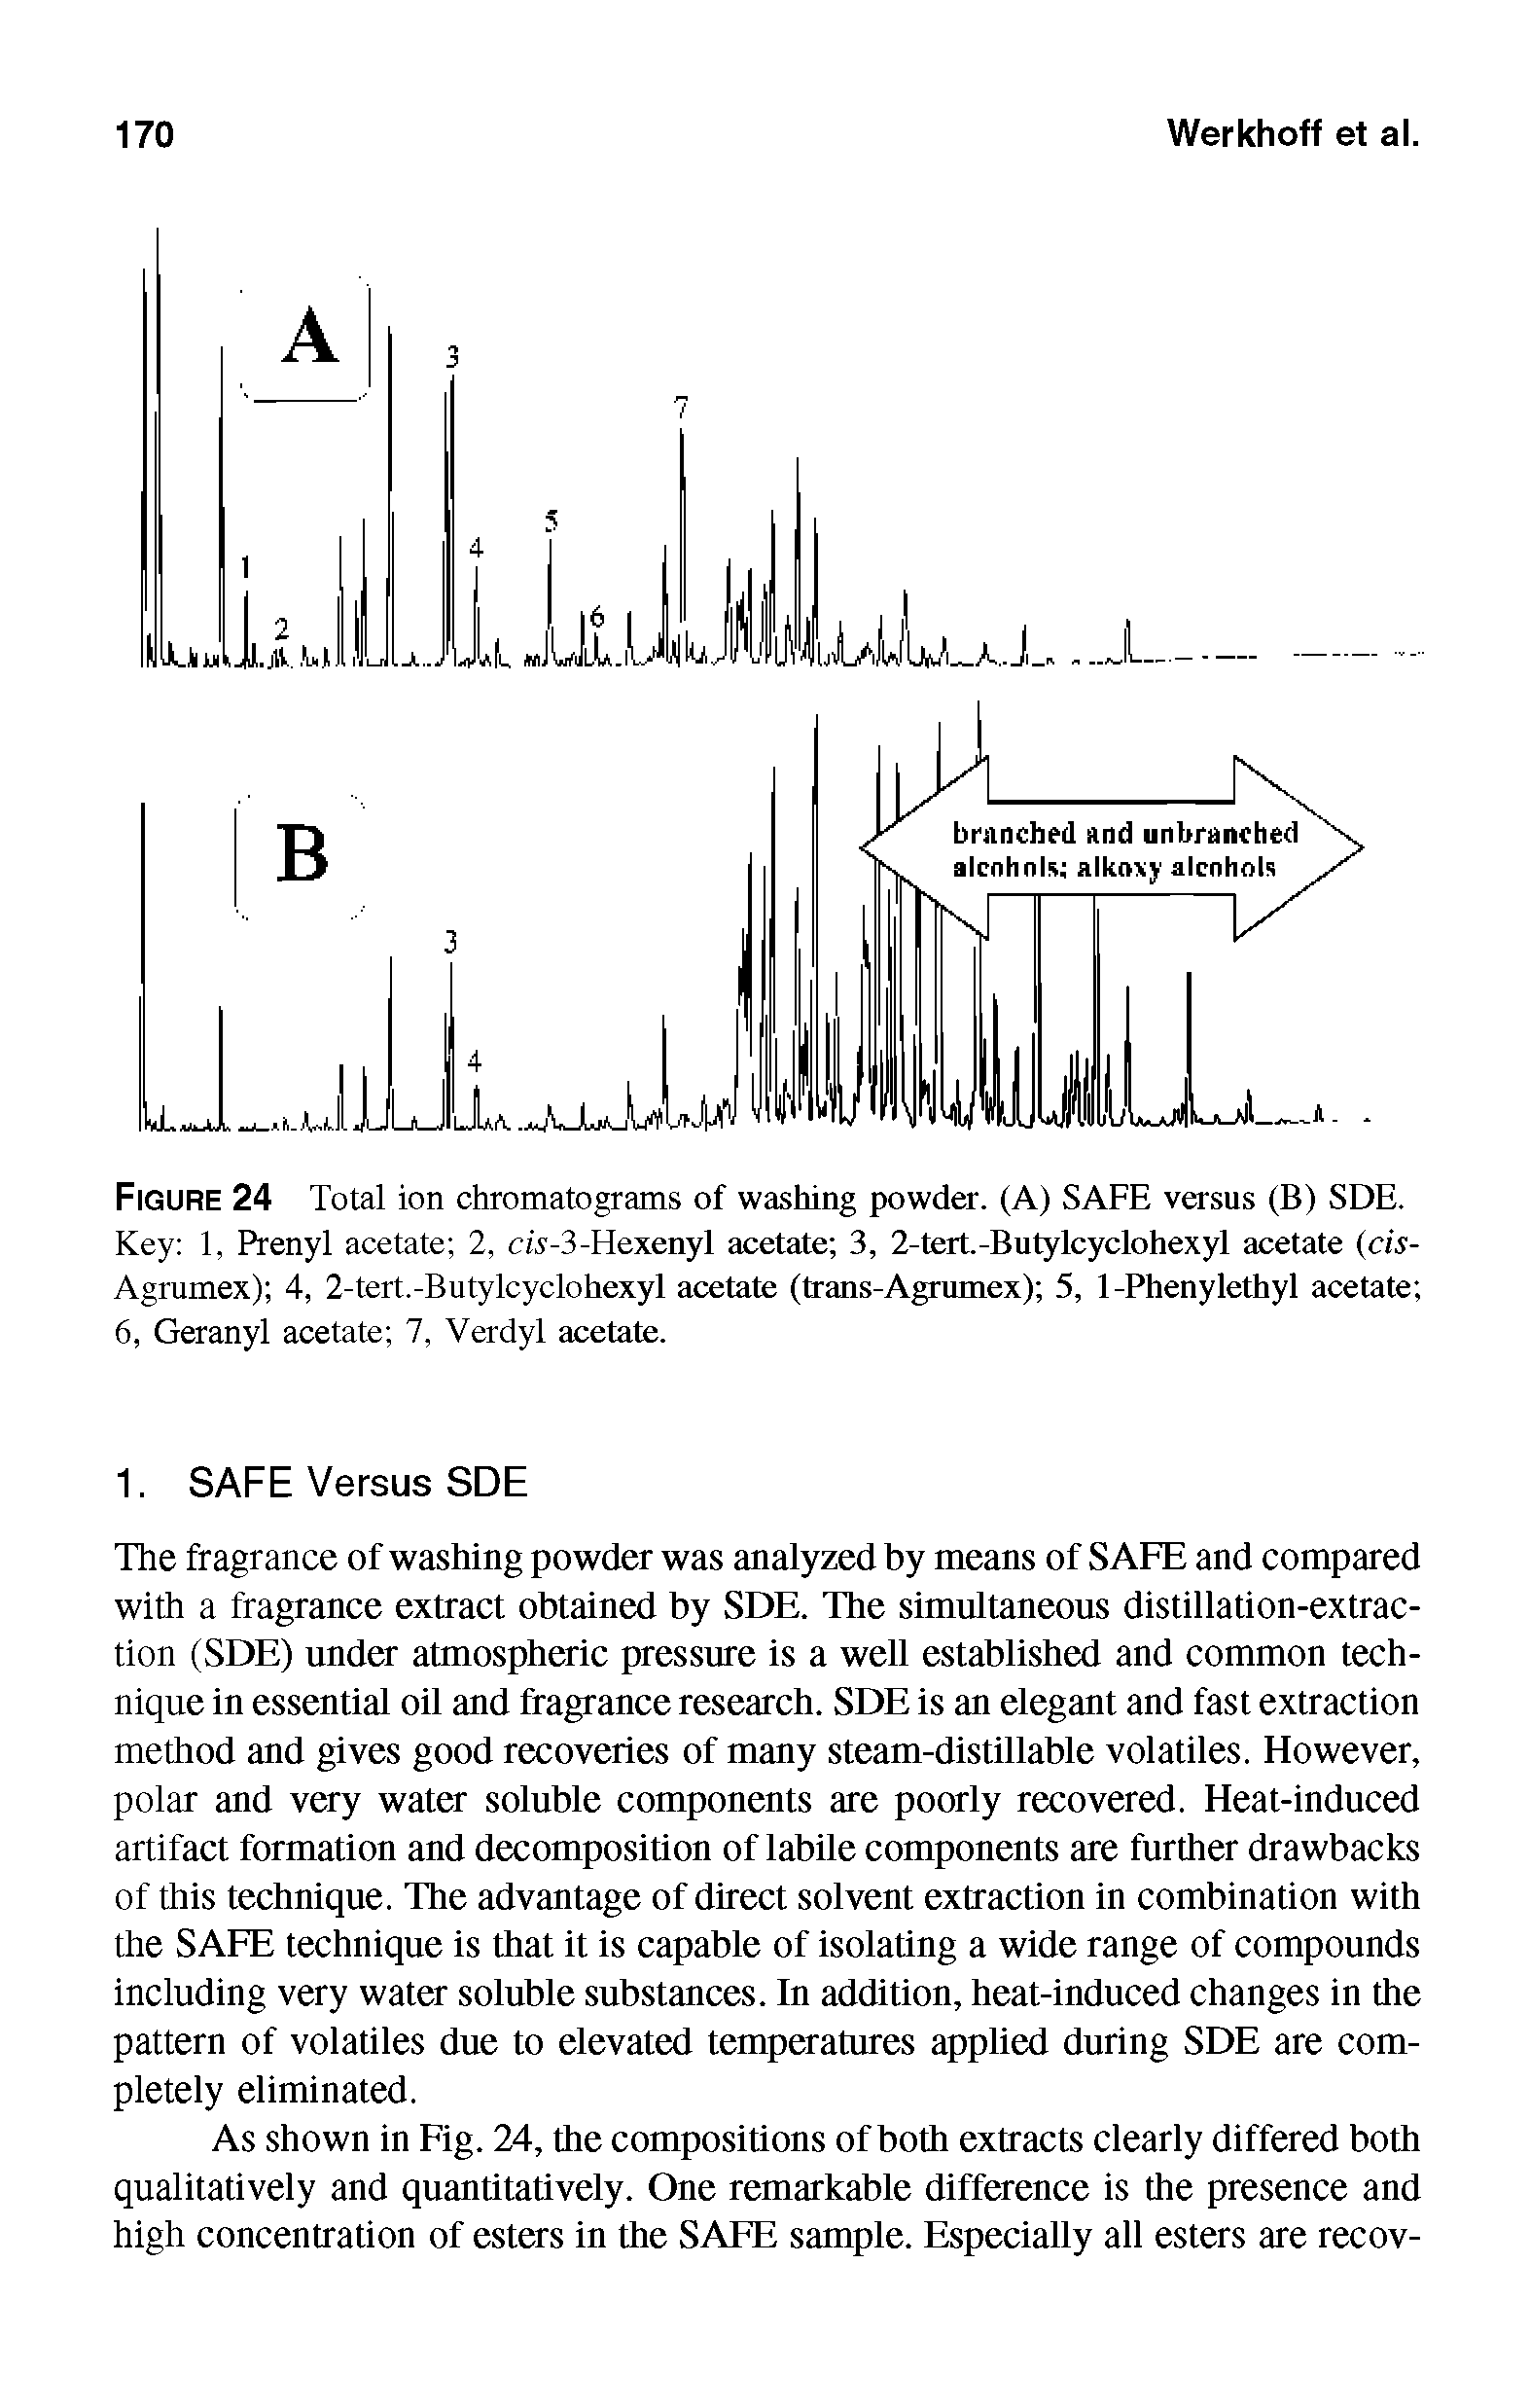 Figure 24 Total ion chromatograms of washing powder. (A) SAFE versus (B) SDE. Key 1, Prenyl acetate 2, cw-3-Hexenyl acetate 3, 2-terL-Butylcyclohexyl acetate (cis-Agrumex) 4, 2-tert.-Butylcyclohexyl acetate (trans-Agnunex) 5, 1-Phenylethyl acetate 6, Geranyl acetate 7, Verdyl acetate.